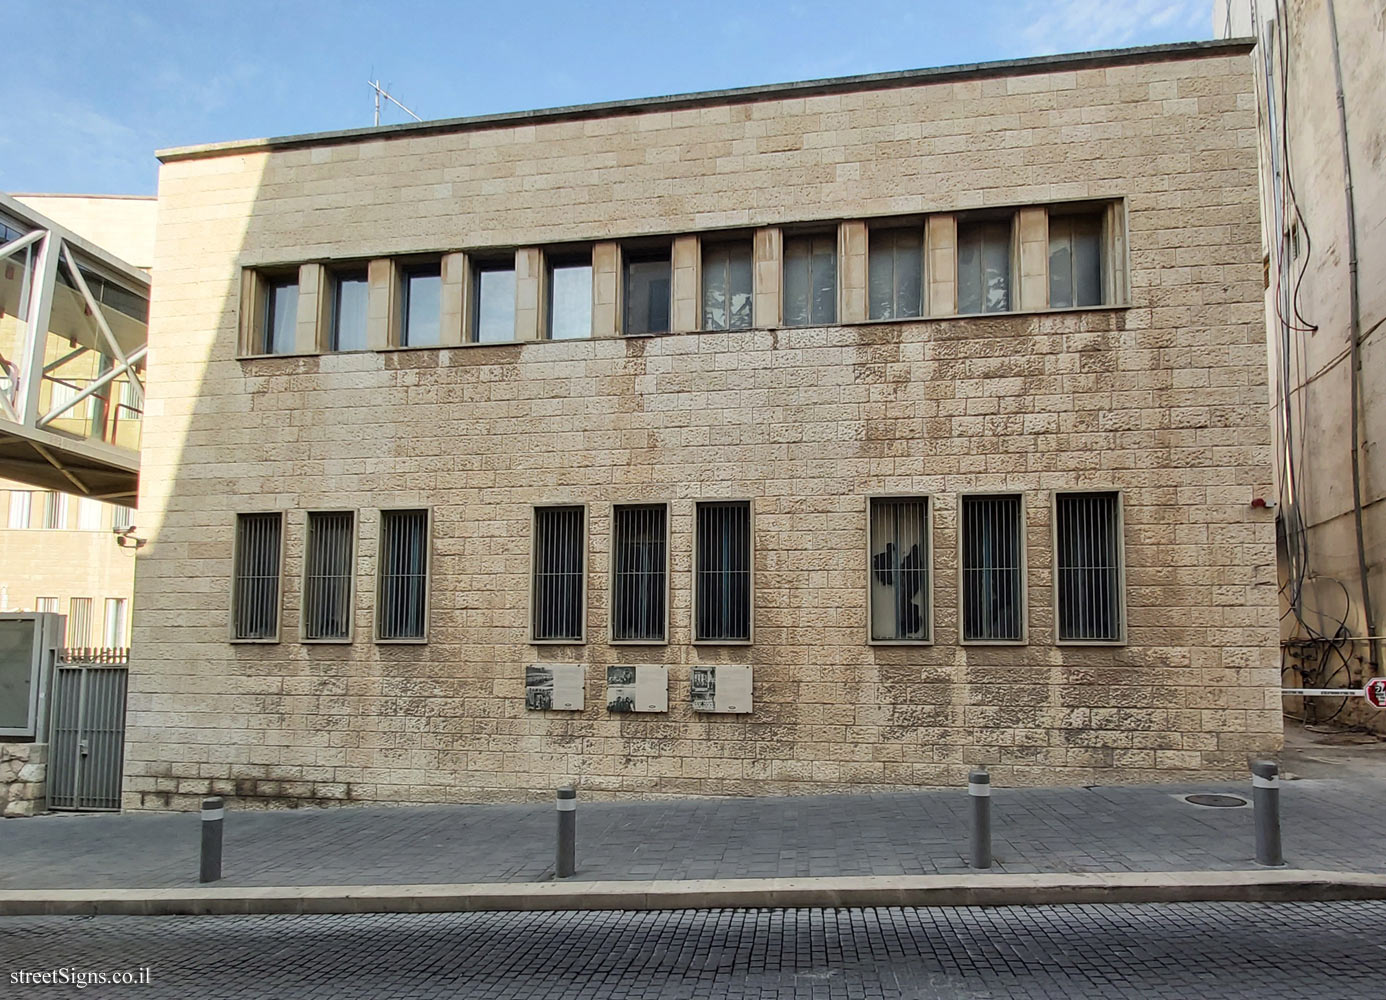 Jerusalem - Photograph in stone - Meir Rothschild Hospital / Henrietta Szold - HaHavatselet St 15, Jerusalem, Israel